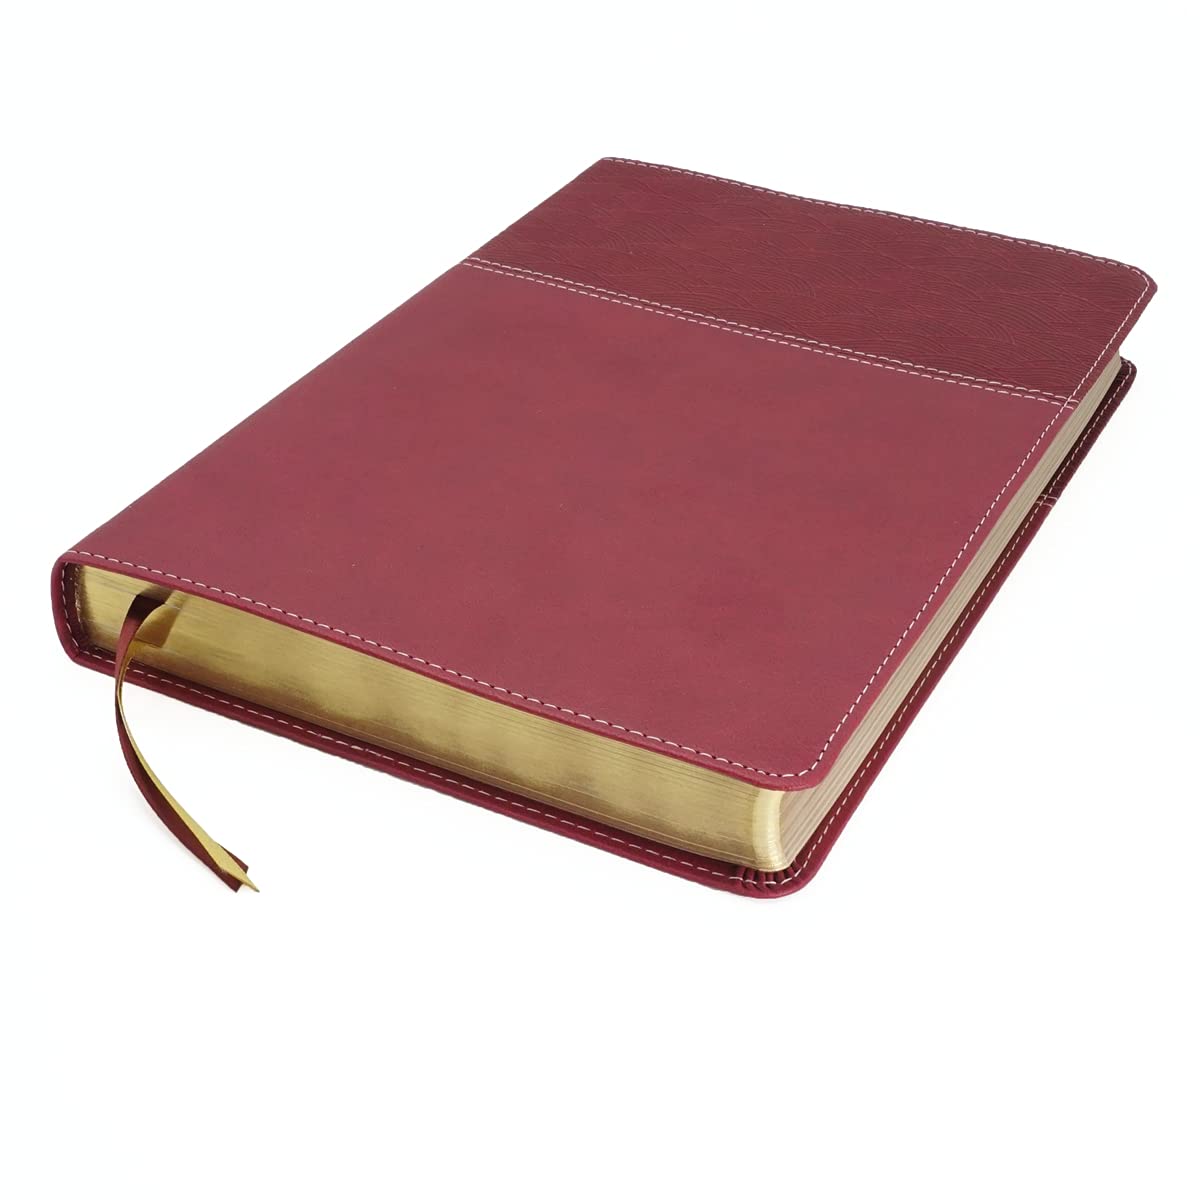 NASB Thinline Bible, Large Print, Leathersoft, Burgundy, 2020 Text, Comfort